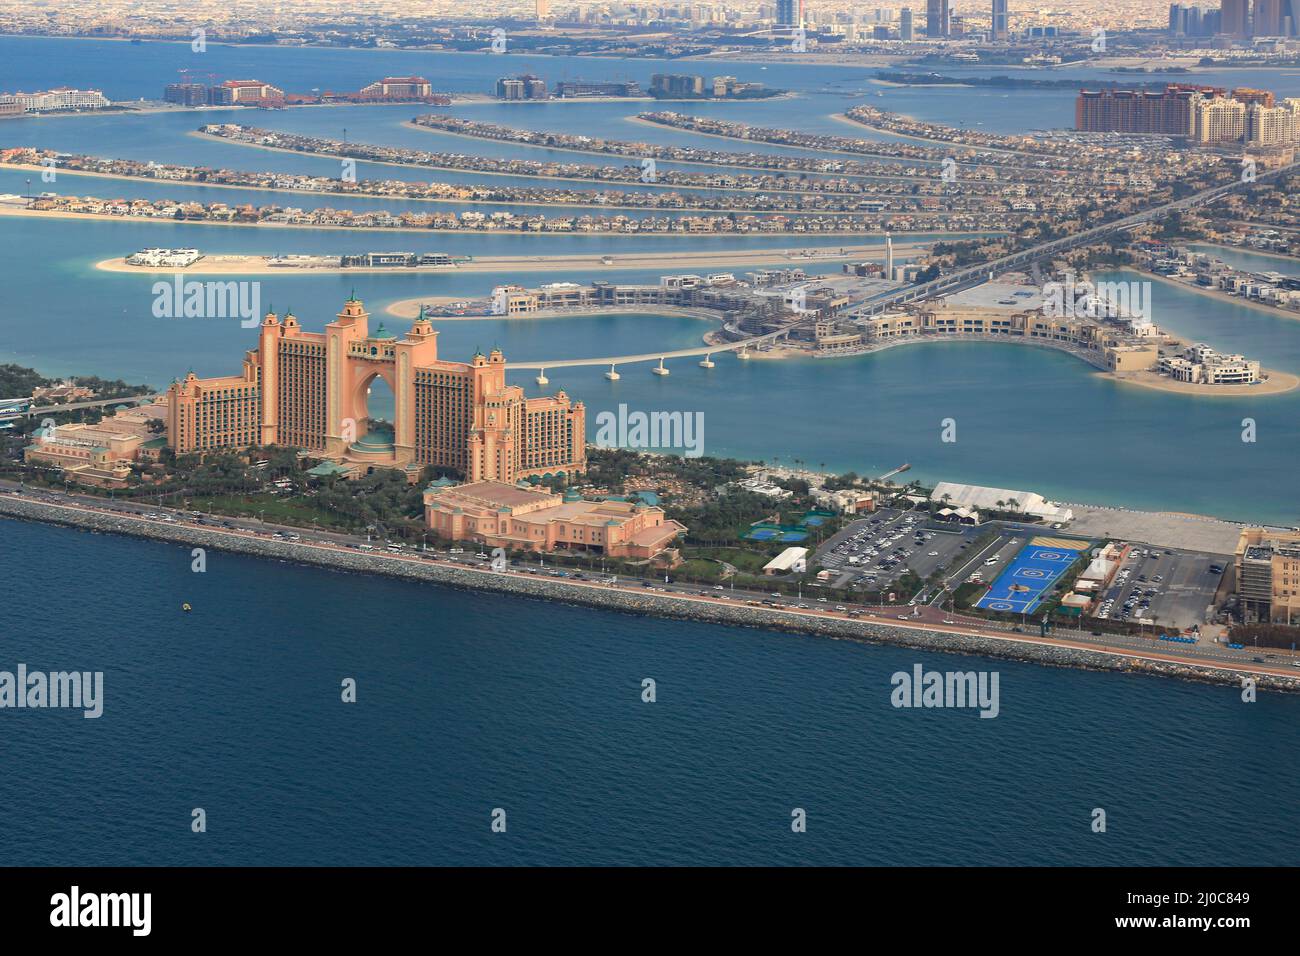 Dubai Atlantis Hotel The Palm Jumeirah Palm Island Aerial View Aerial Photo Stock Photo